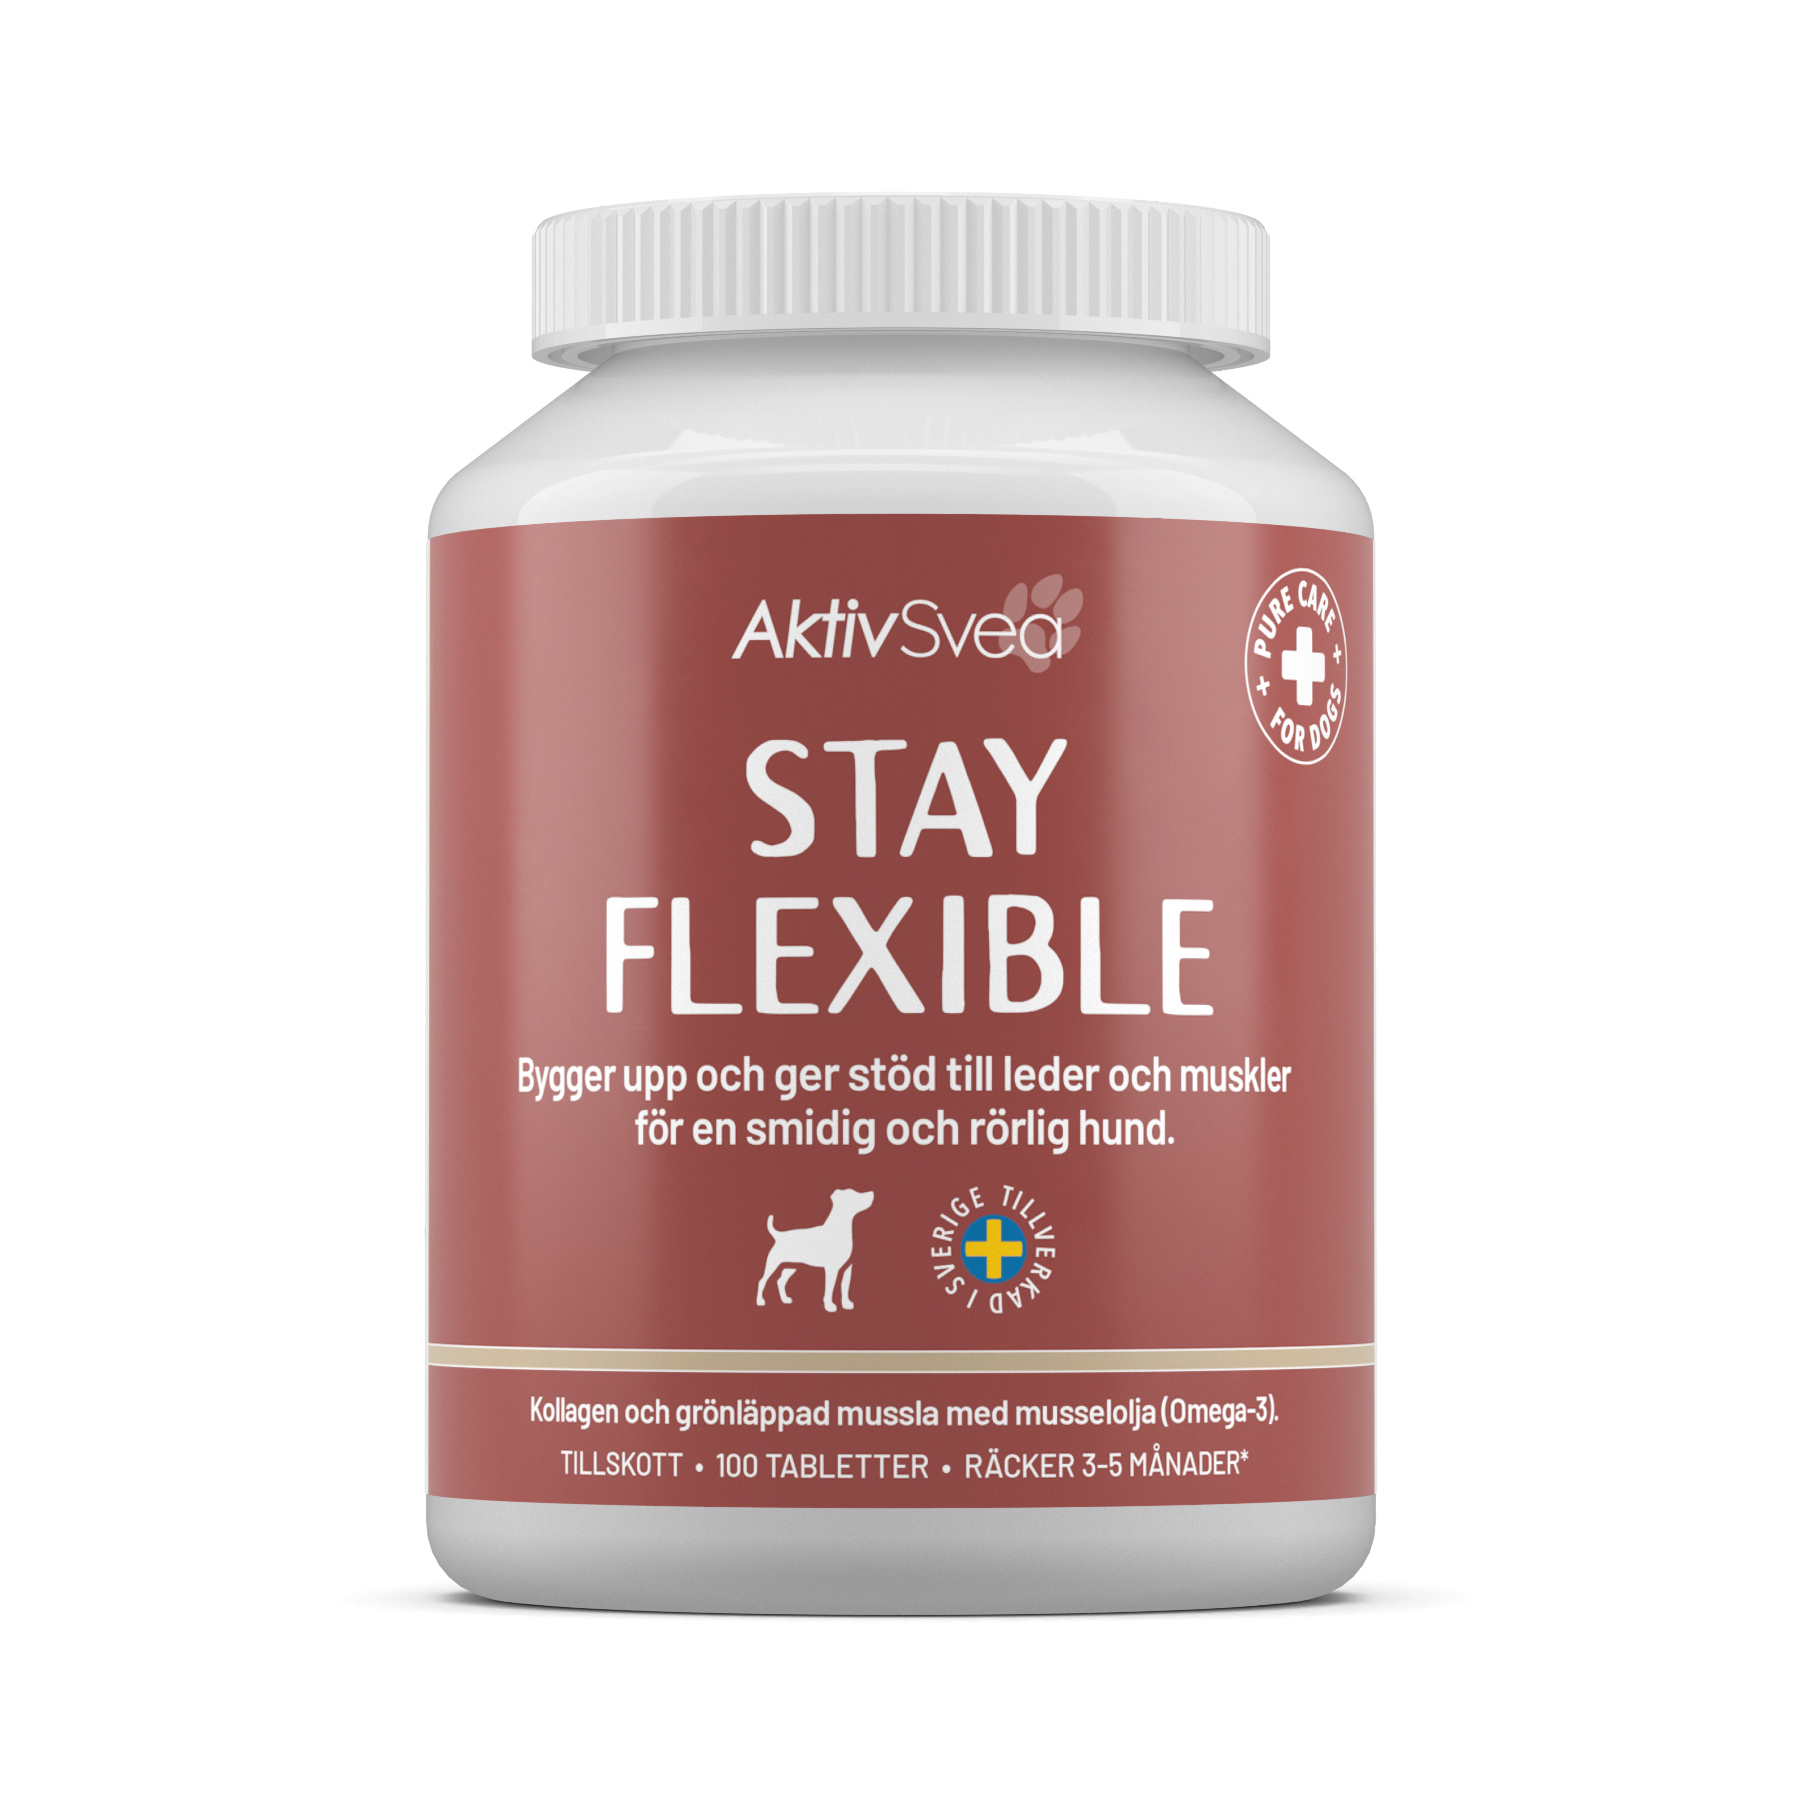 Framsidan av Aktiv Svea Stay Flexible - 10 tabletter.